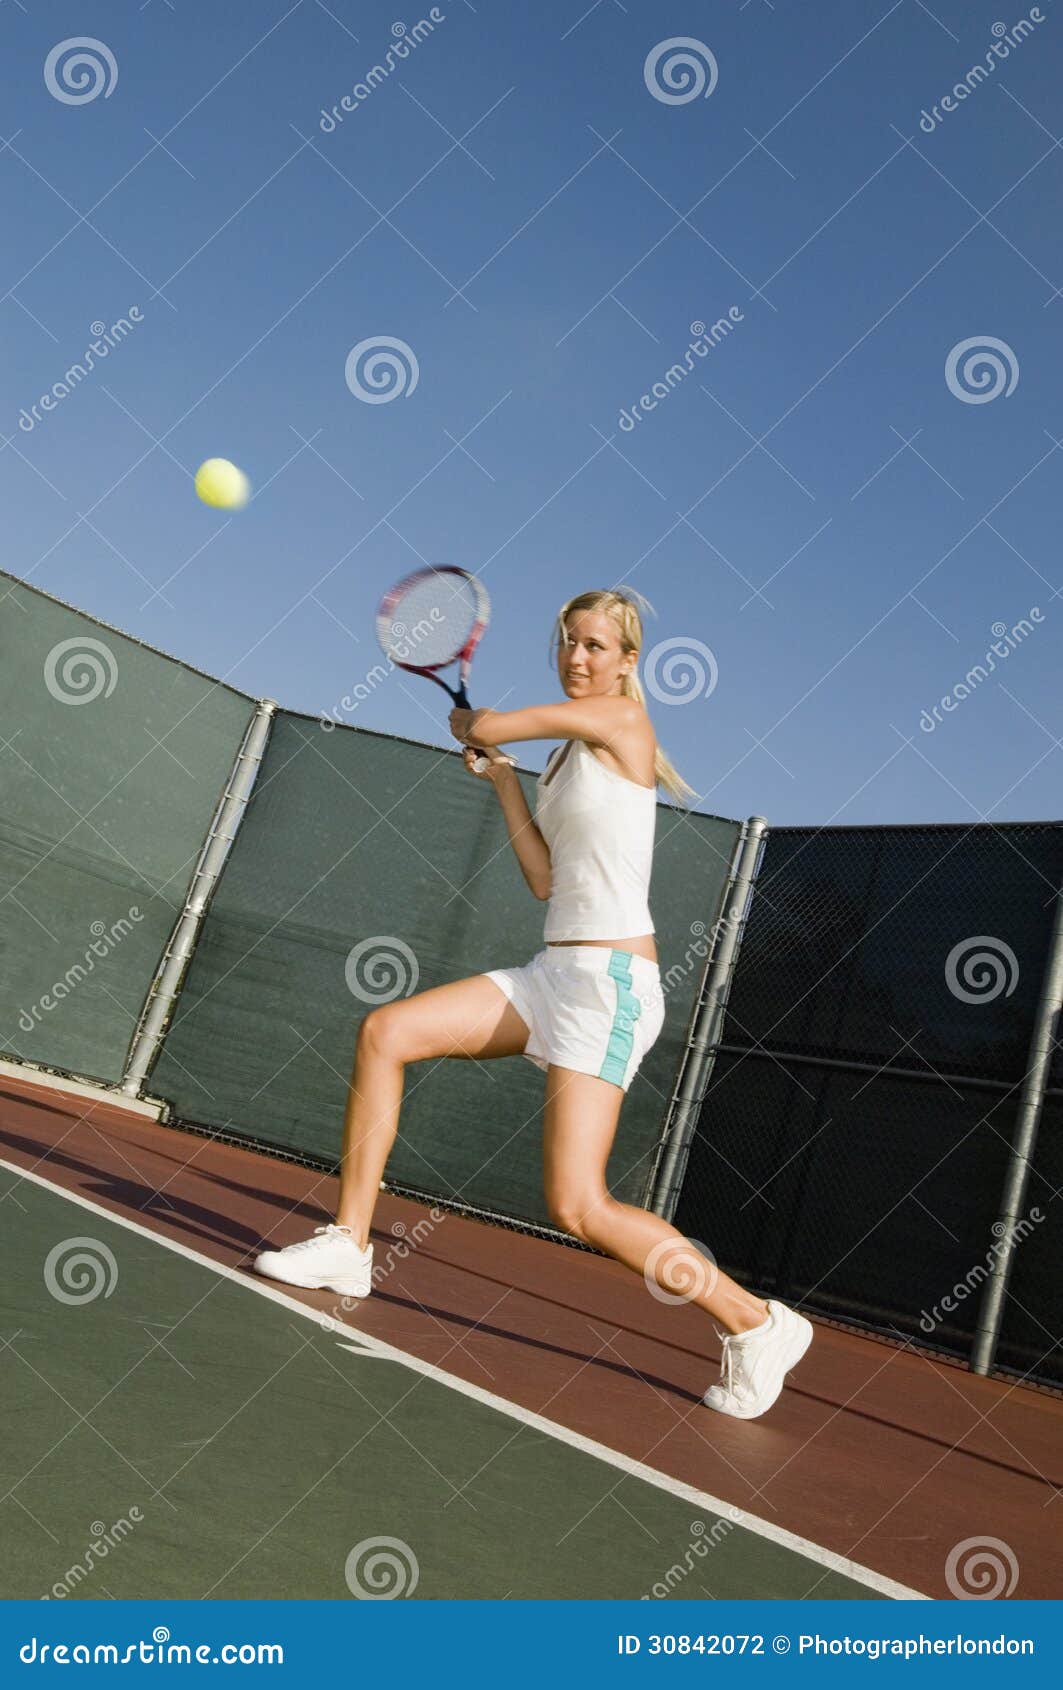 tennis player hitting backhand on court